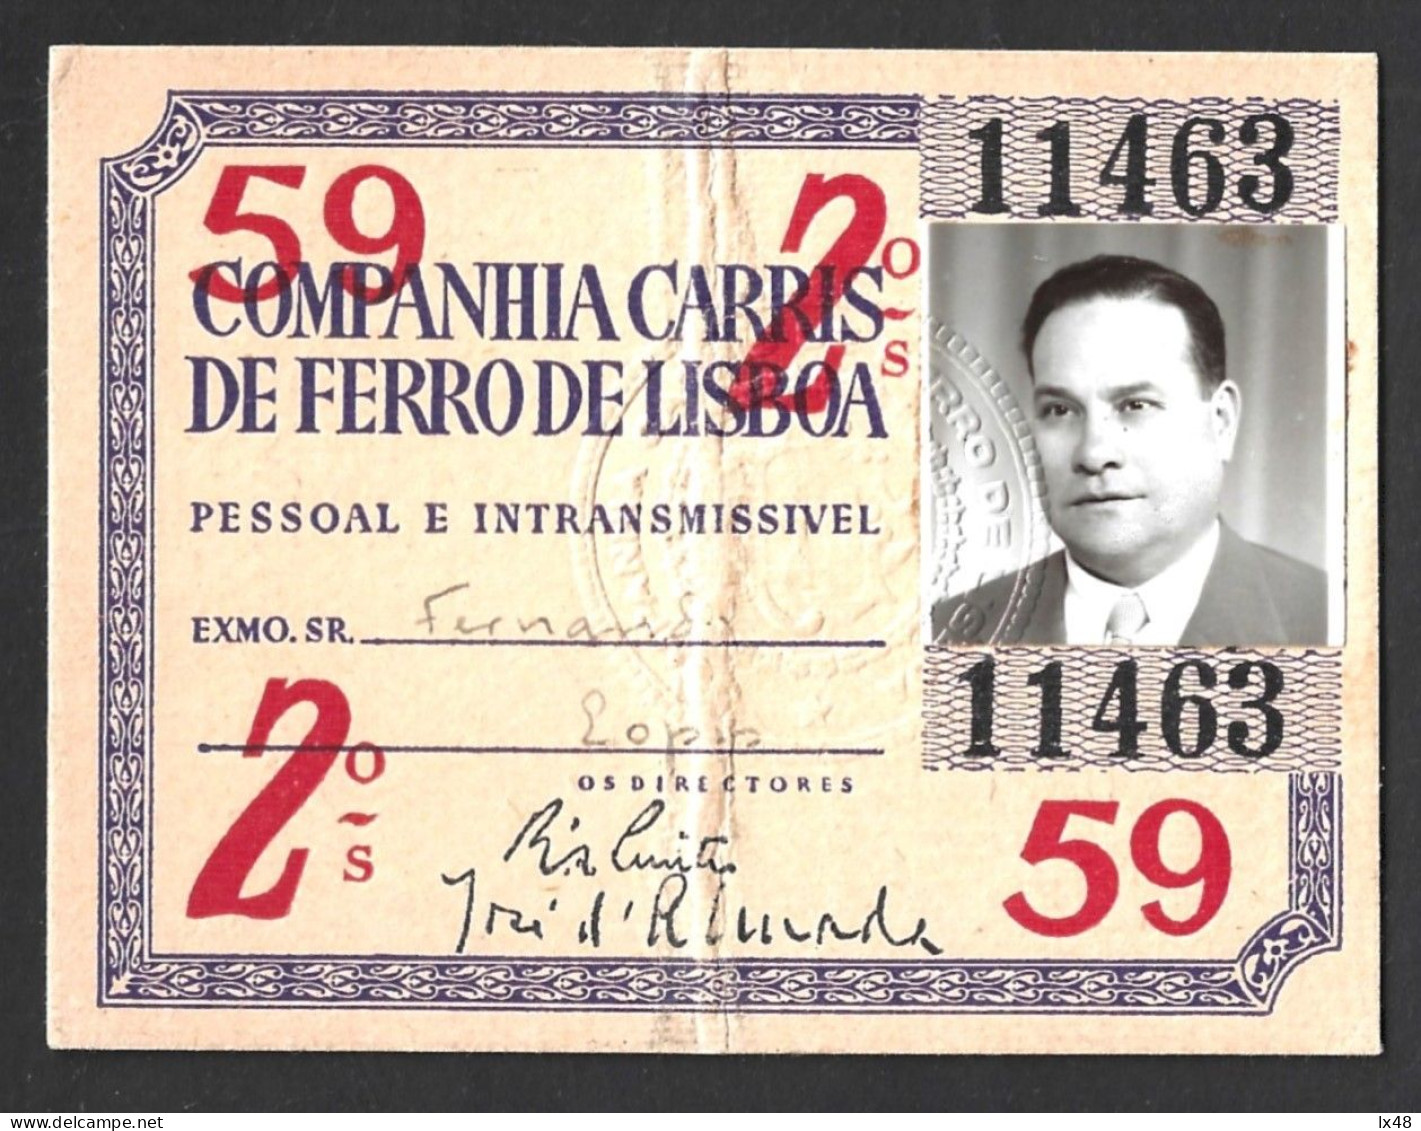 Carris De Lisboa Semi-annual Railway Card From 1959. Halbjährliche Eisenbahnkarte Von Carris De Lisboa Aus Dem Jahr 1959 - Welt